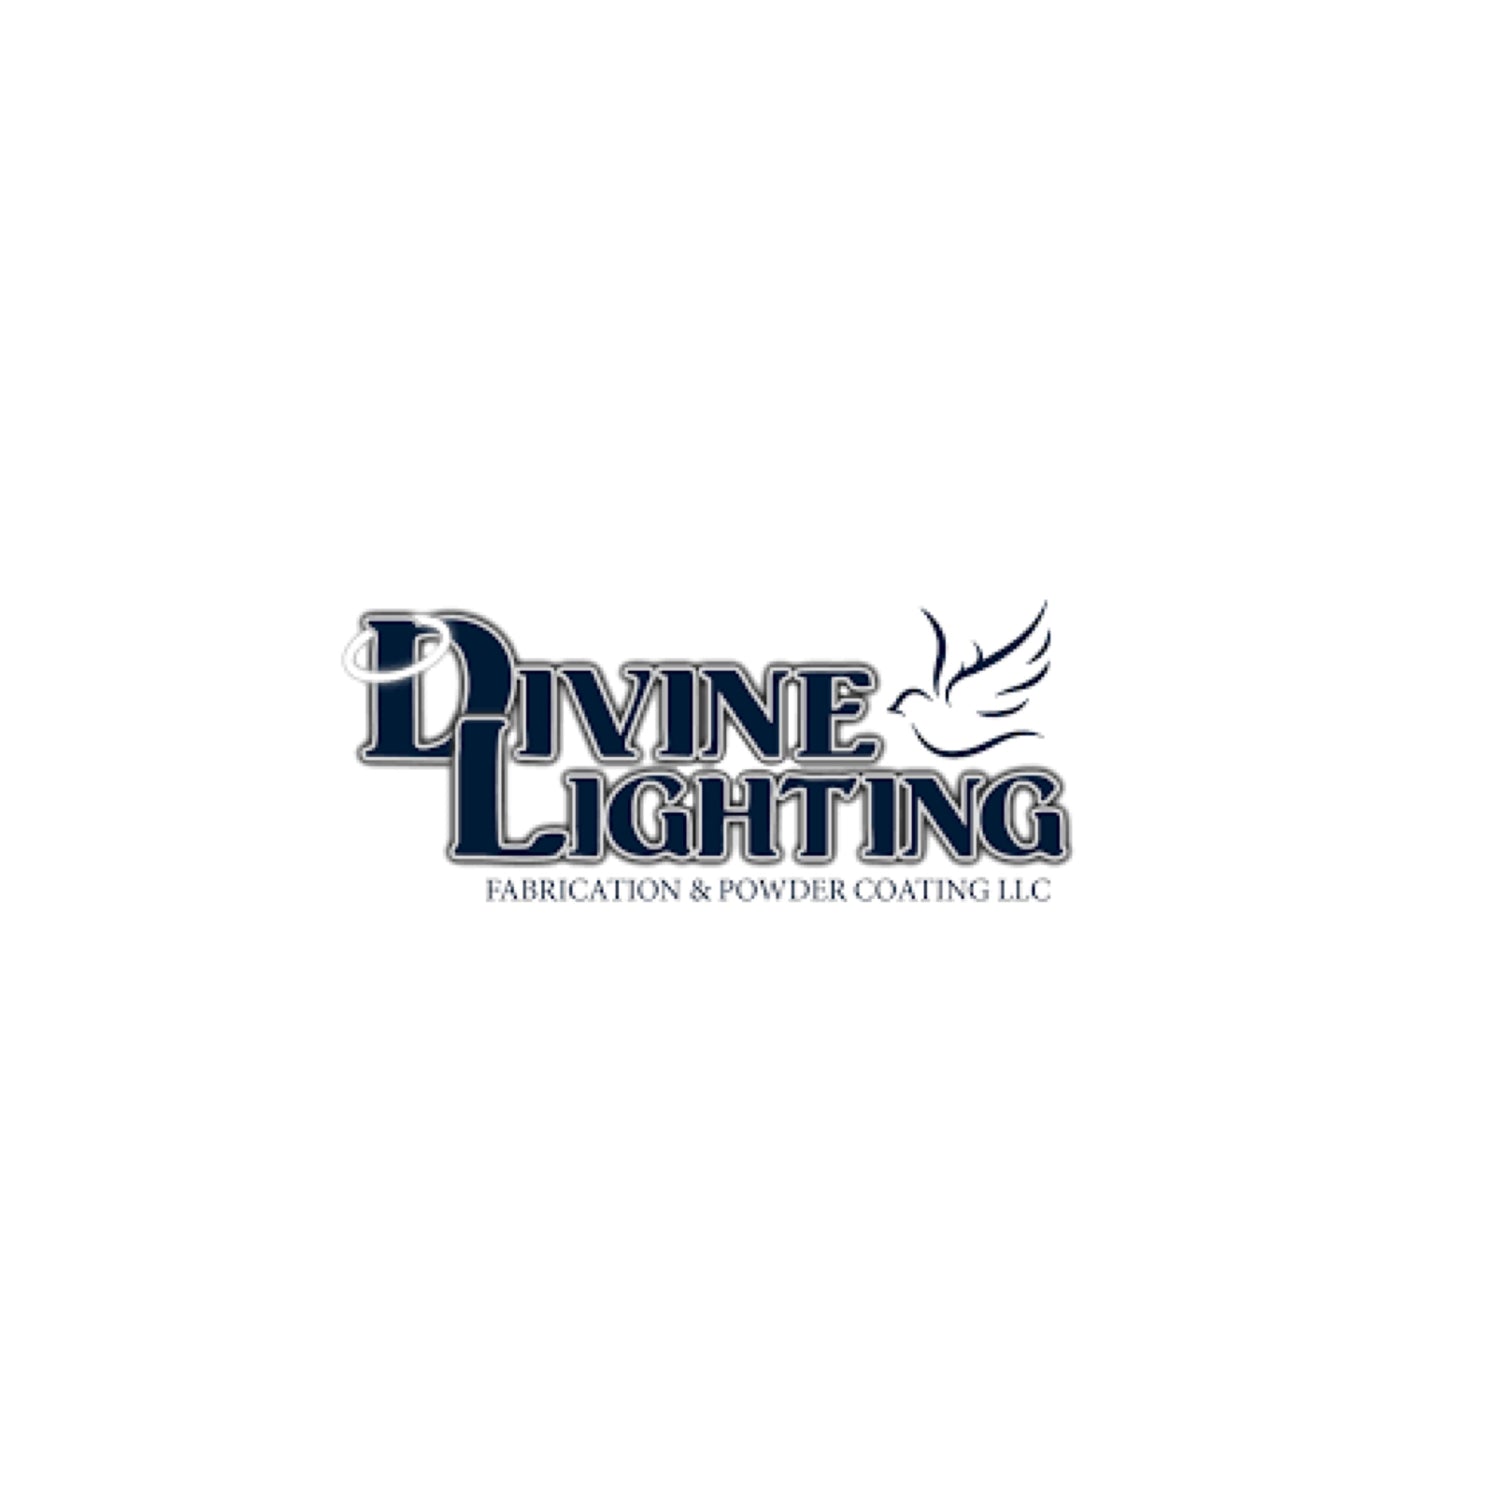 DIVINE LIGHTING FABRICATION & POWDER COATING LLC